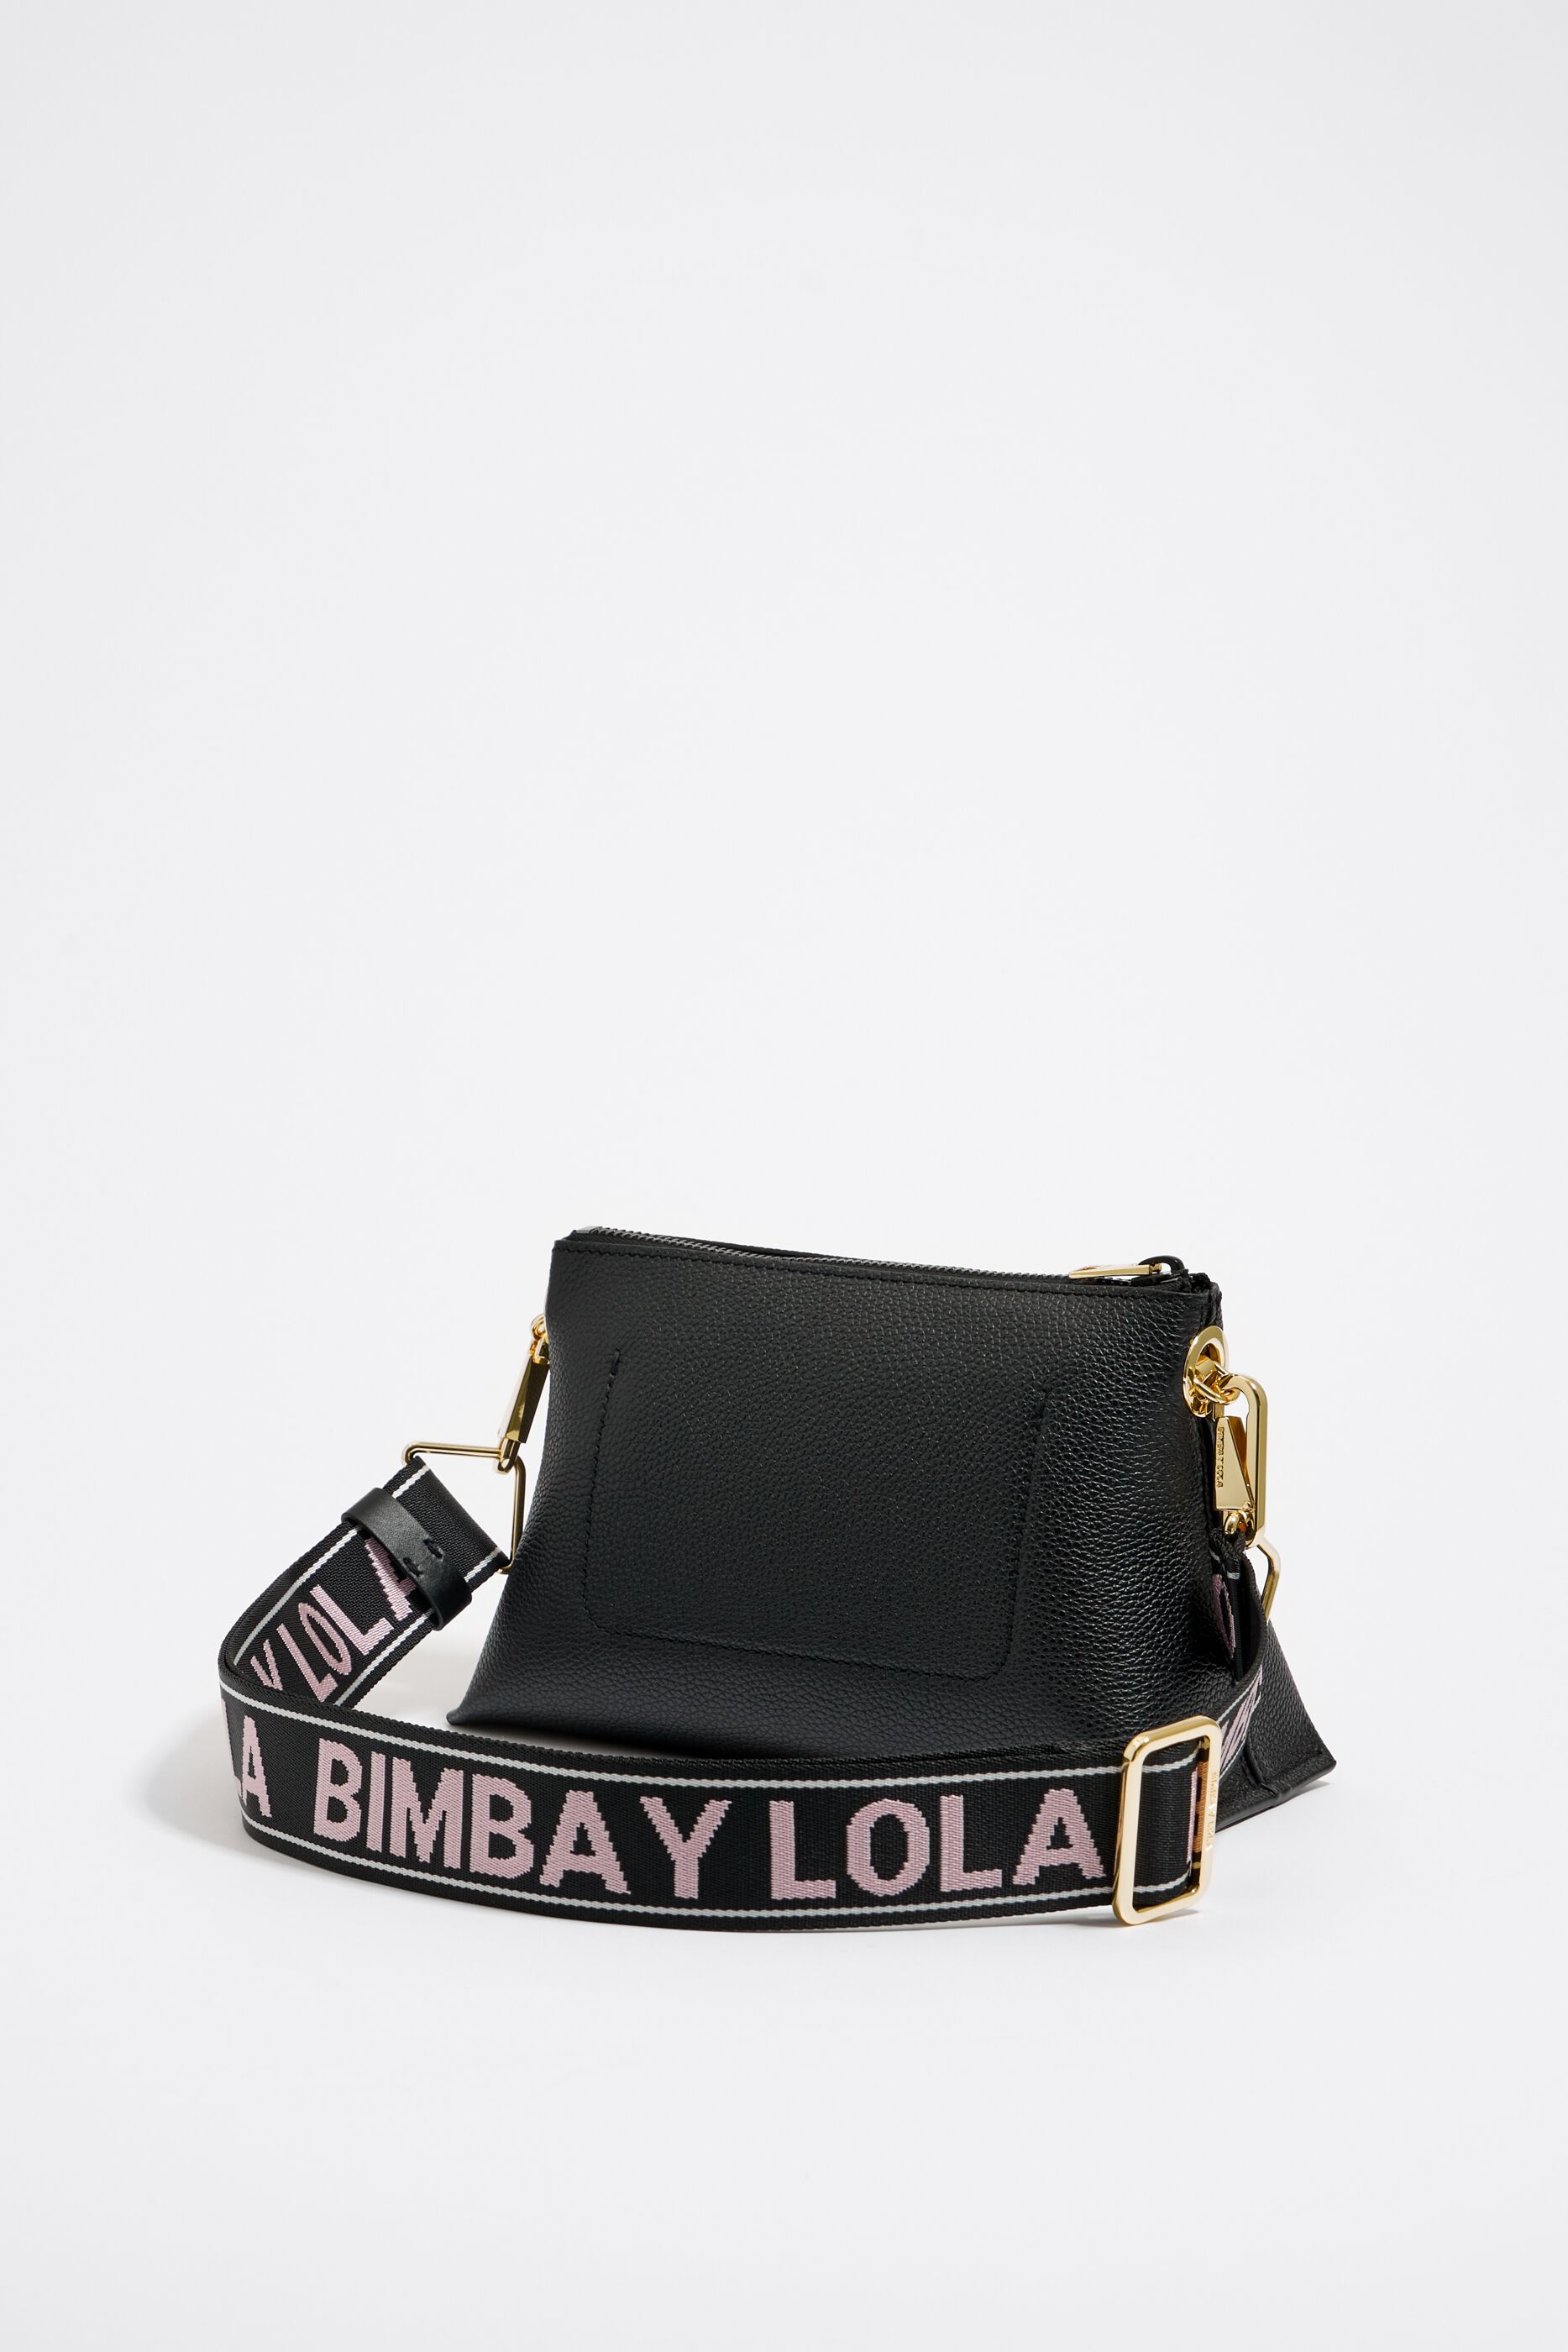 Bimba y Lola Are Bringing Back The Pocked Bag | British Vogue